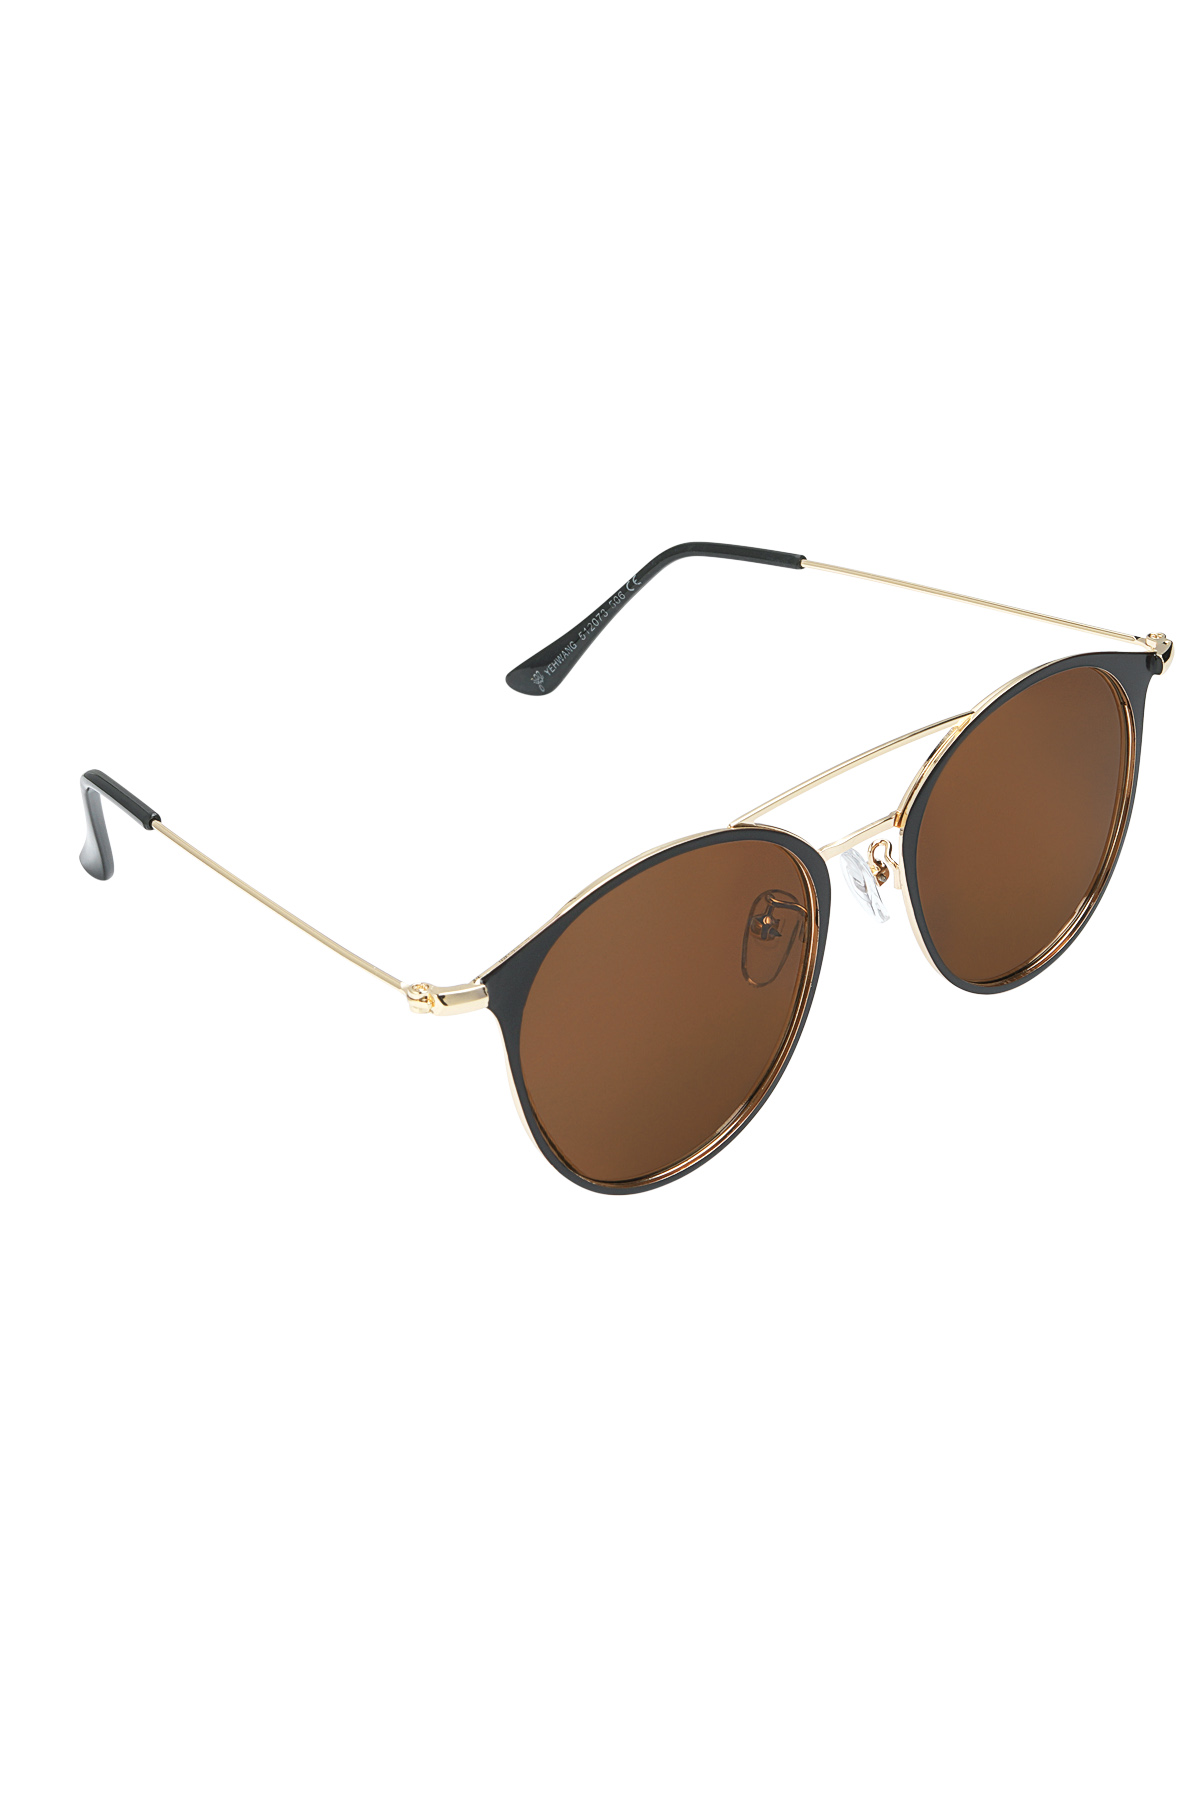 Sunglasses summer vibe - brown/black h5 